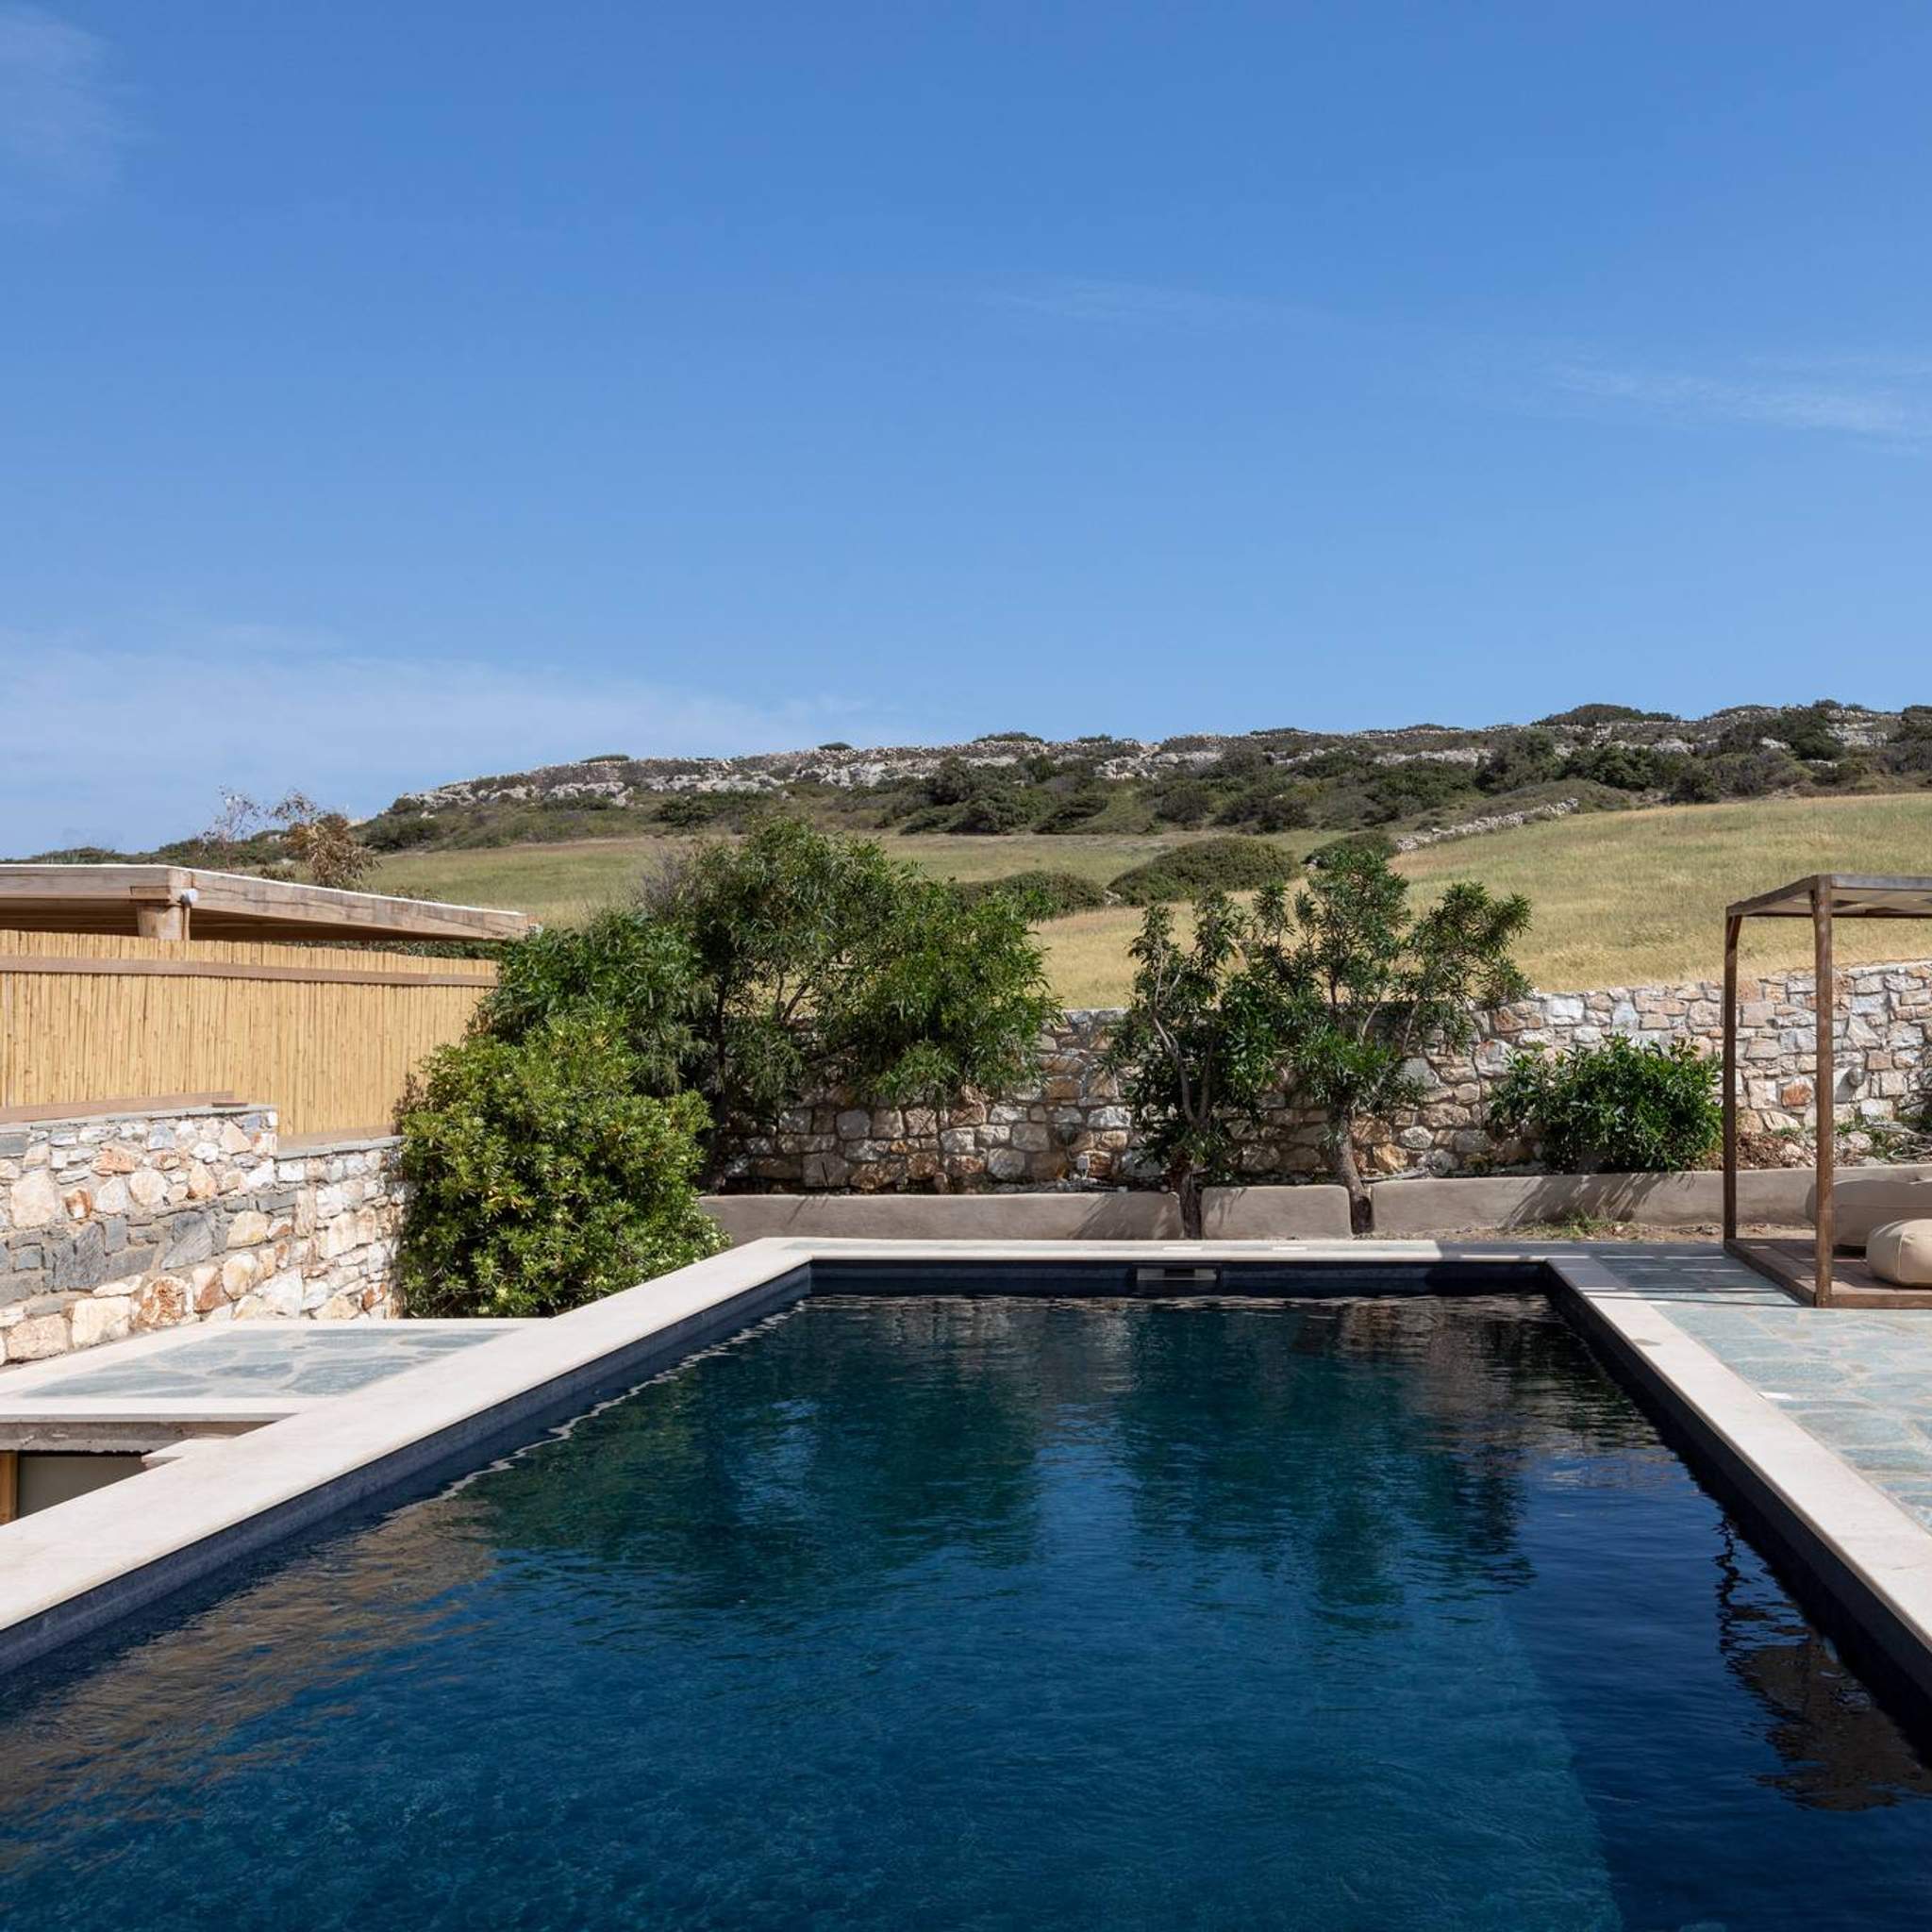 Avra. Relax and rejuvenate by the pool, where comfort meets luxury under the Greek sun.
.
#AmalgamHomes #ArtOfComfort #GreekIslands #CycladesMagic #VisitGreece #DiscoverGreece #Paros #Naxos #Mykonos #Tinos